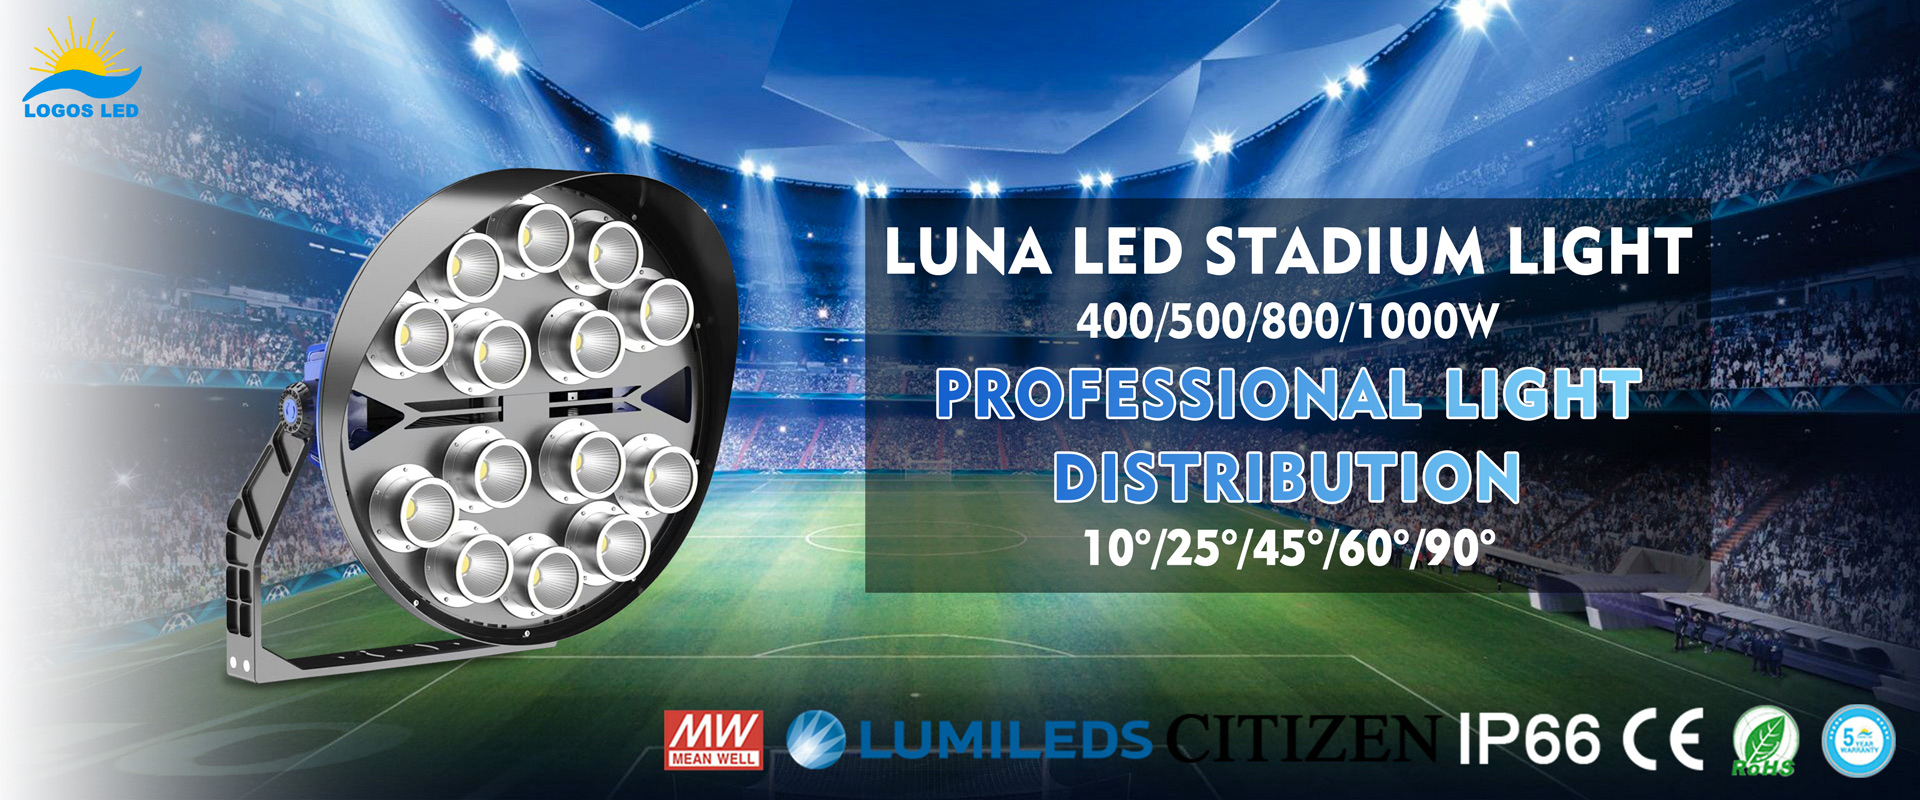 Luna LED STADIUM LIGHT